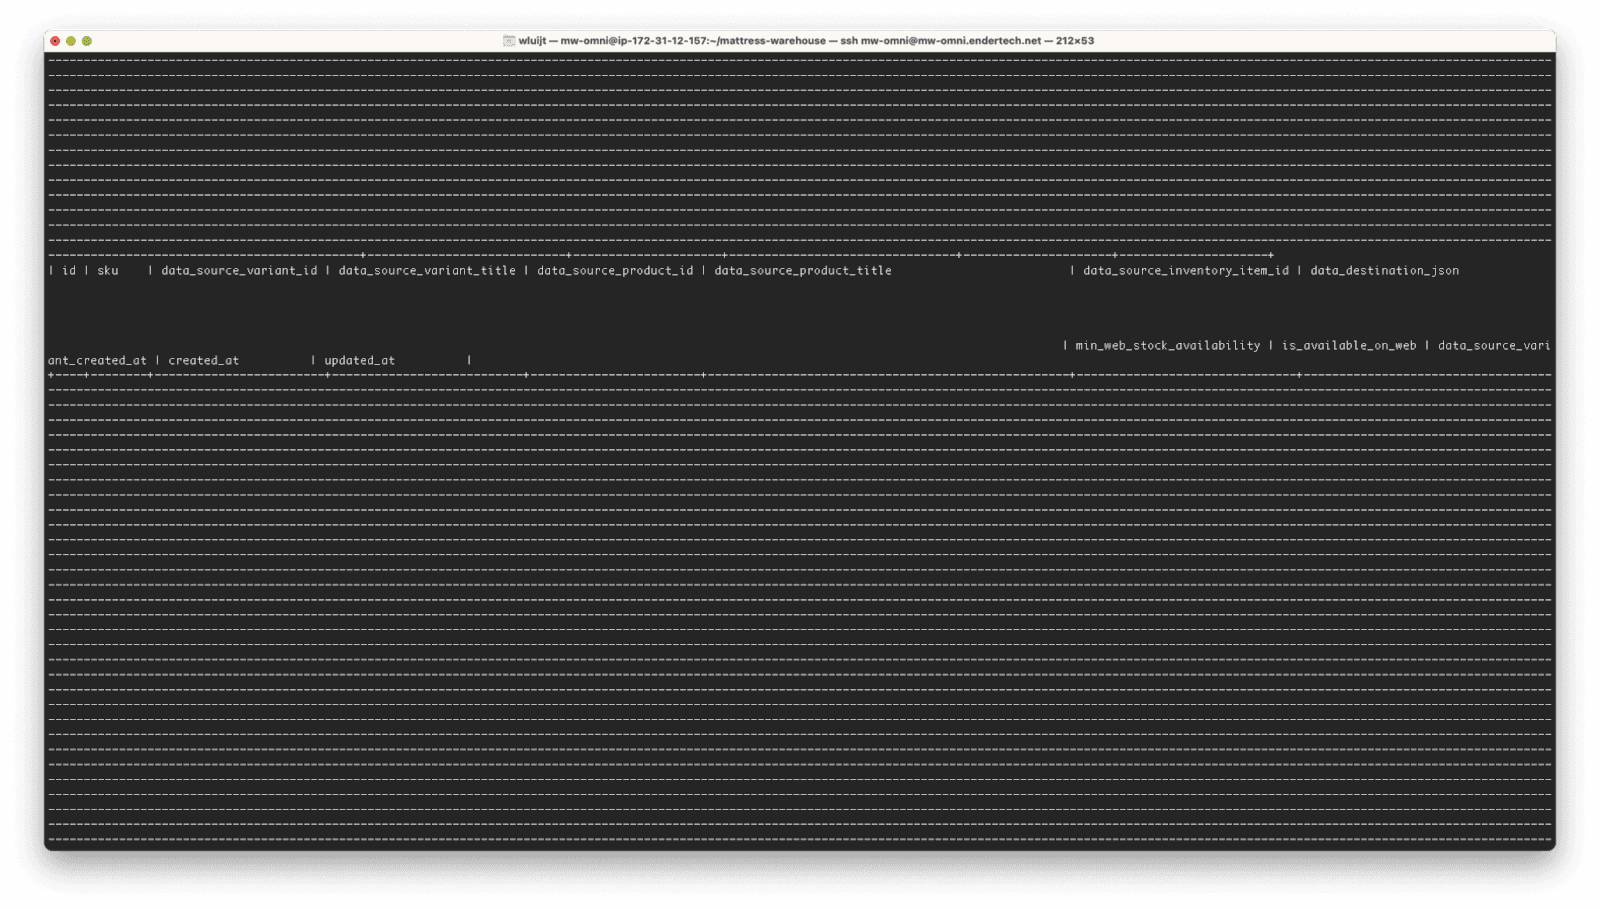 Image showing MySQL Command Line Formatting Tips and screenshot of MySQL screen while formatting.